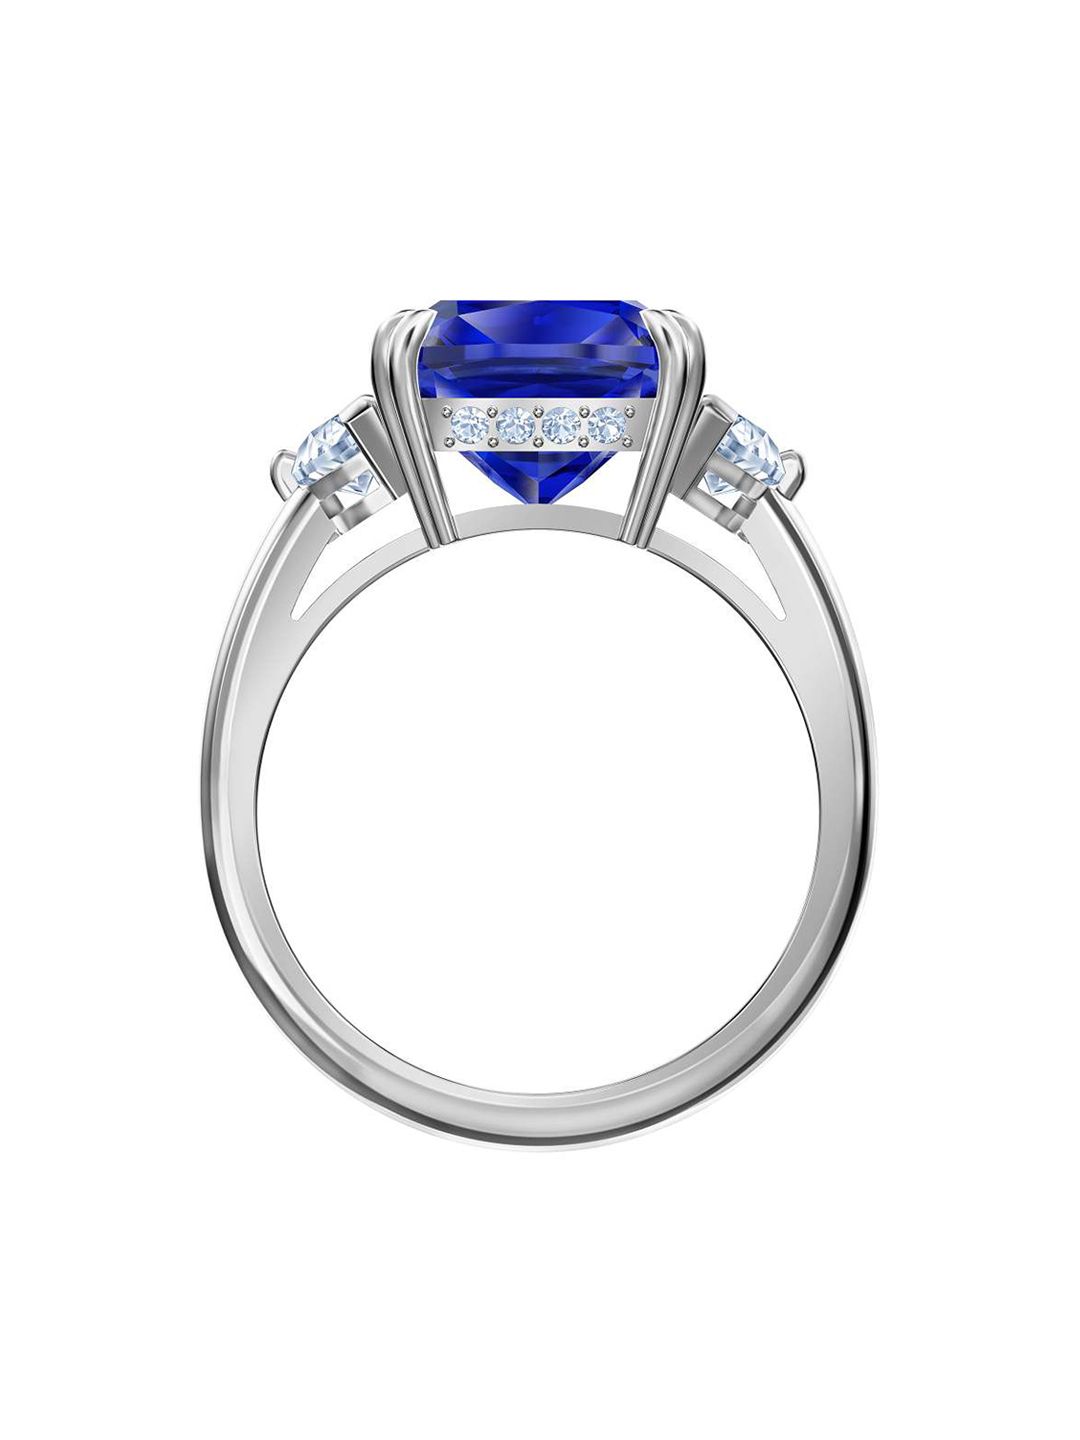 SWAROVSKI Blue Crystal Studded Finger Rings Price in India